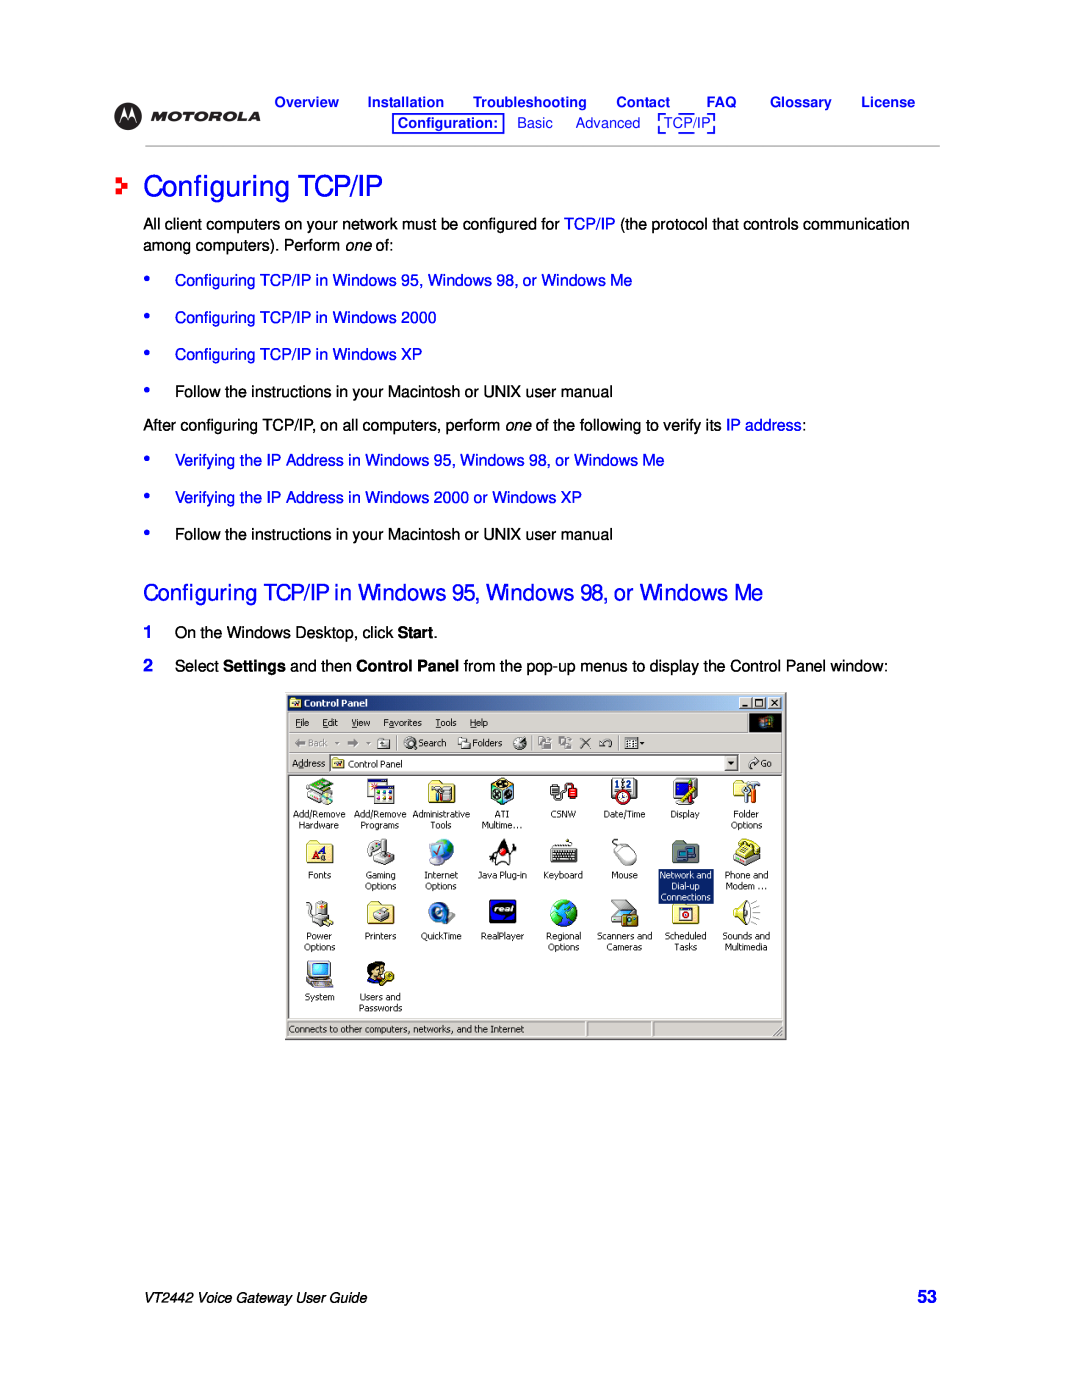 Motorola VT2442 manual Configuring TCP/IP in Windows 95, Windows 98, or Windows Me 